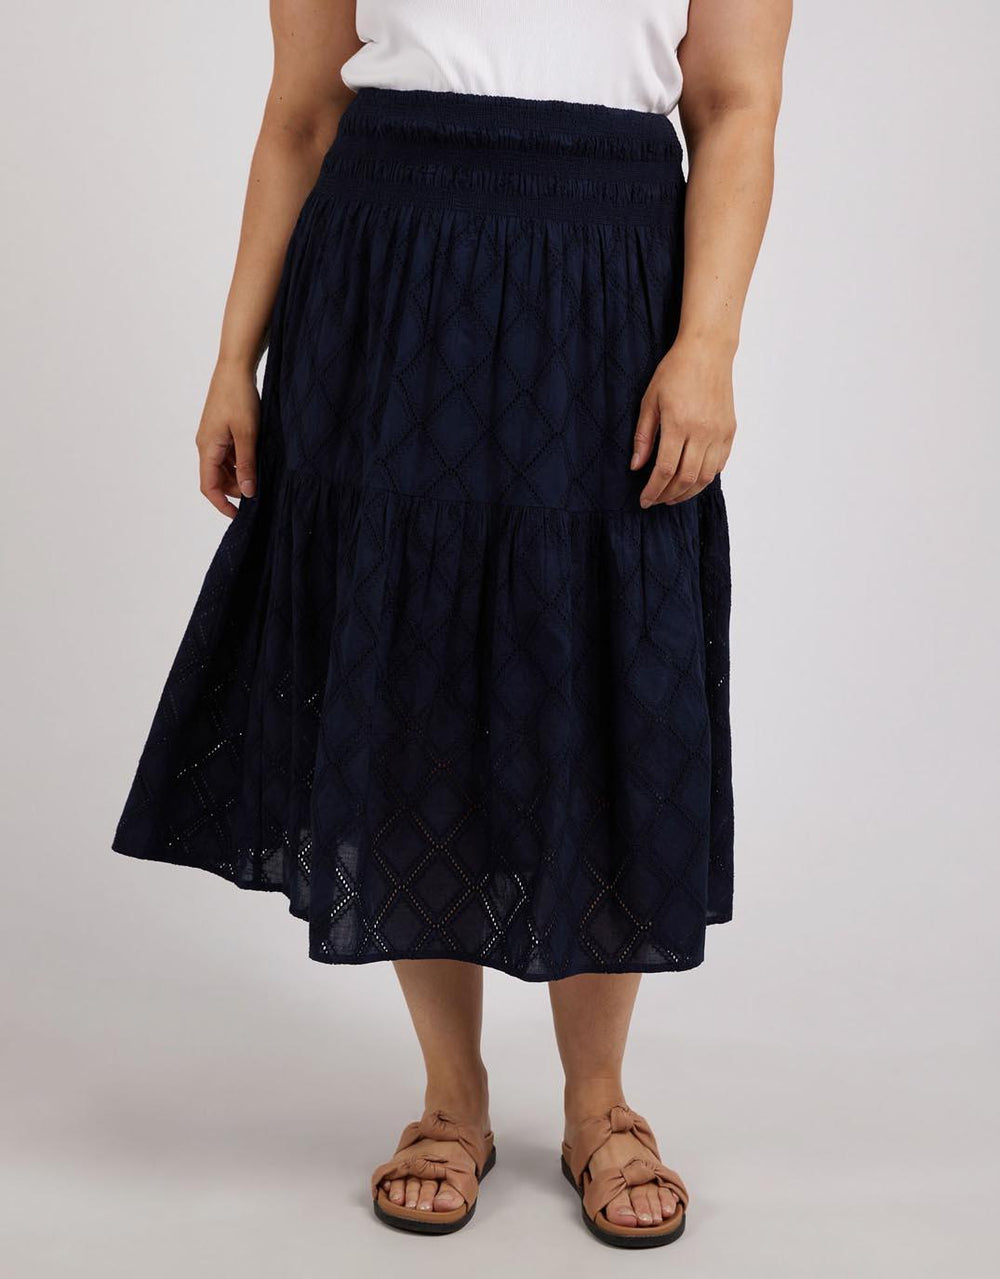 Elm - Ottilie Broderie Skirt - Navy - paulaglazebrook Skirts